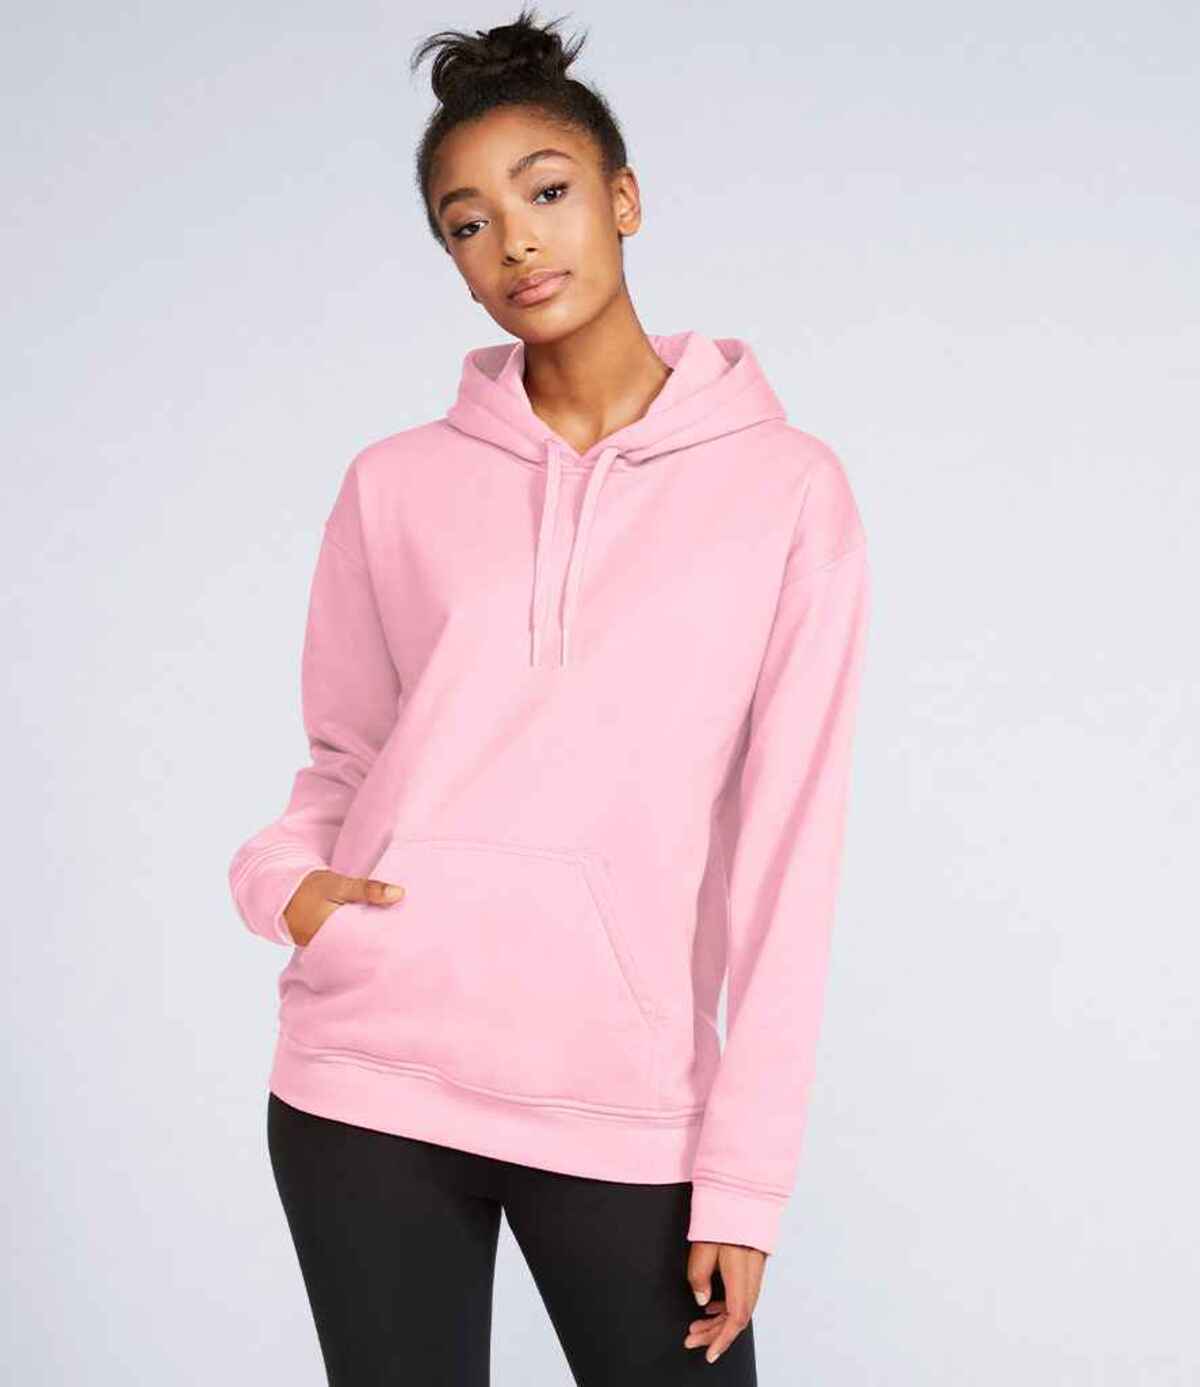 Gildan - Sweatshirt - Light Pink